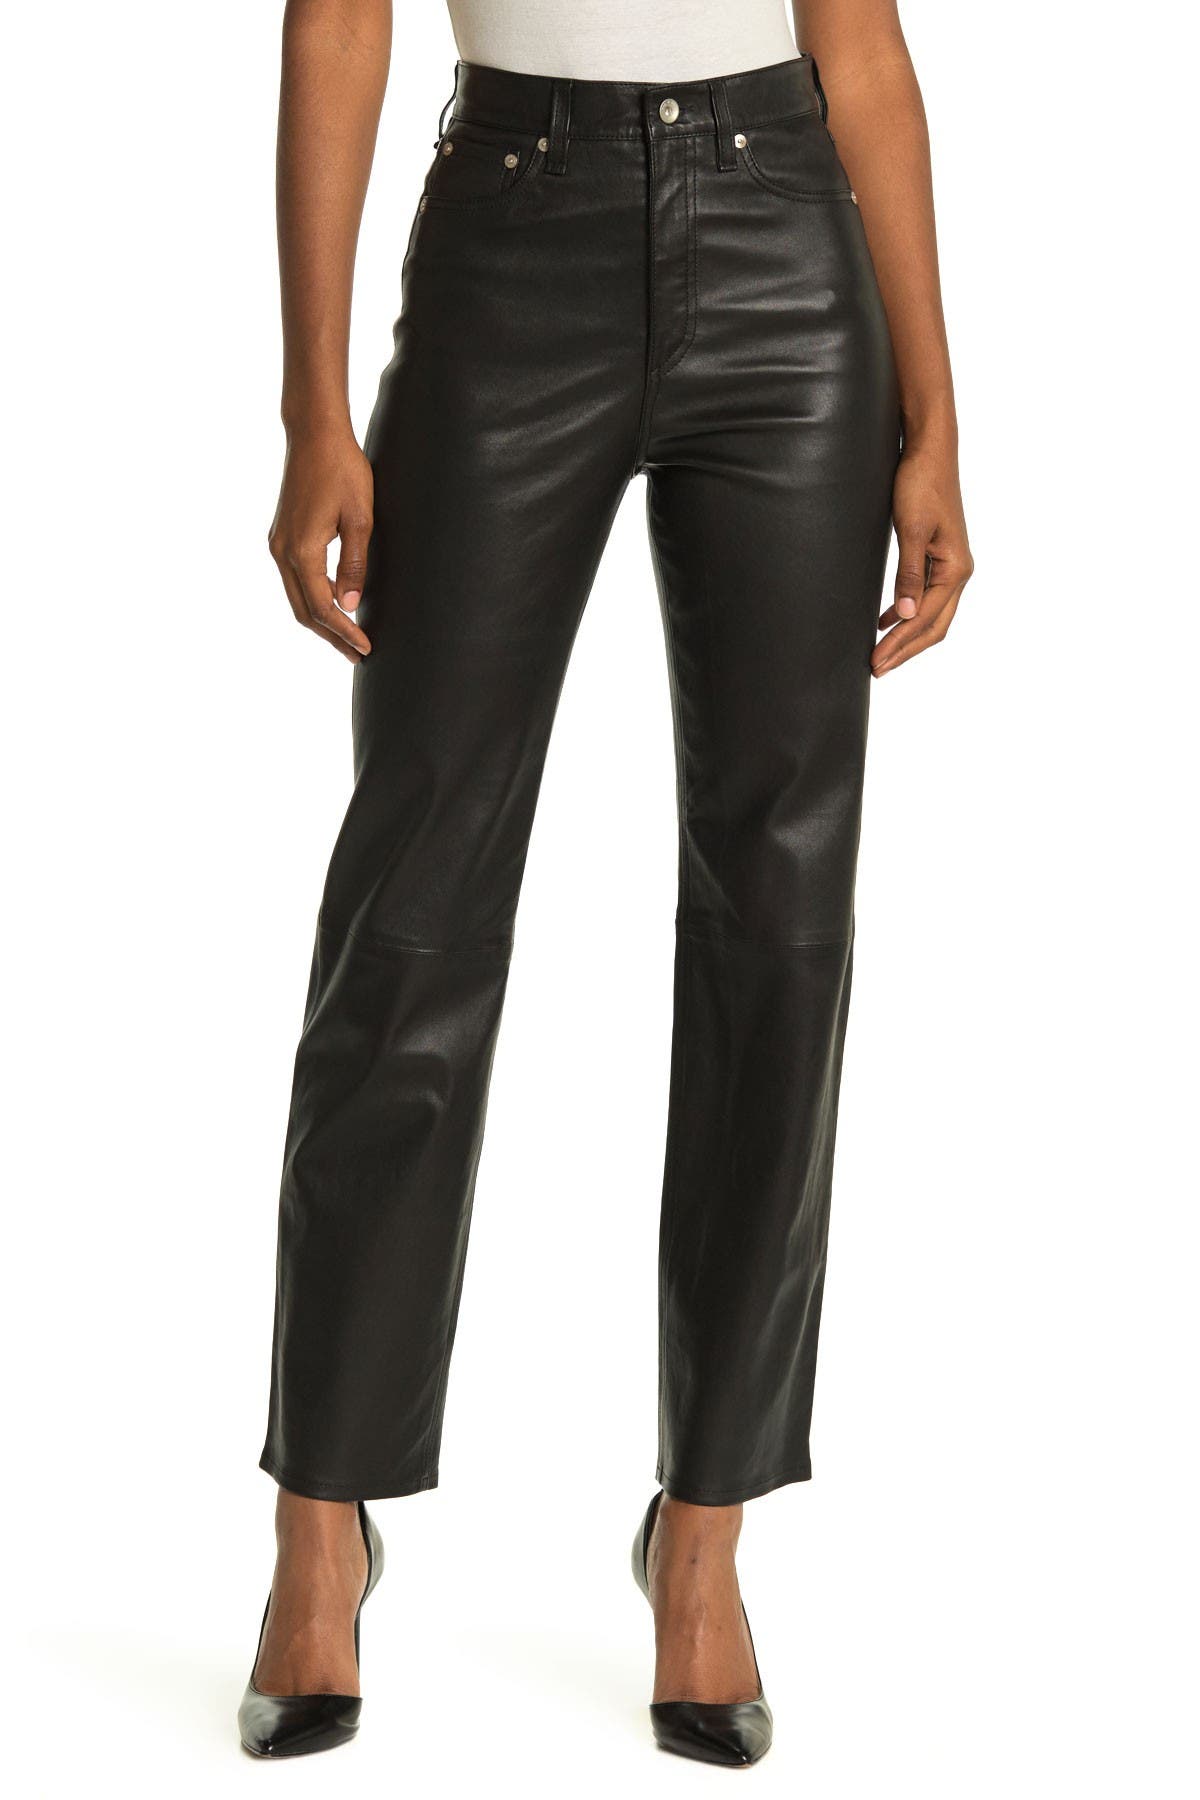 nordstrom rack leather pants